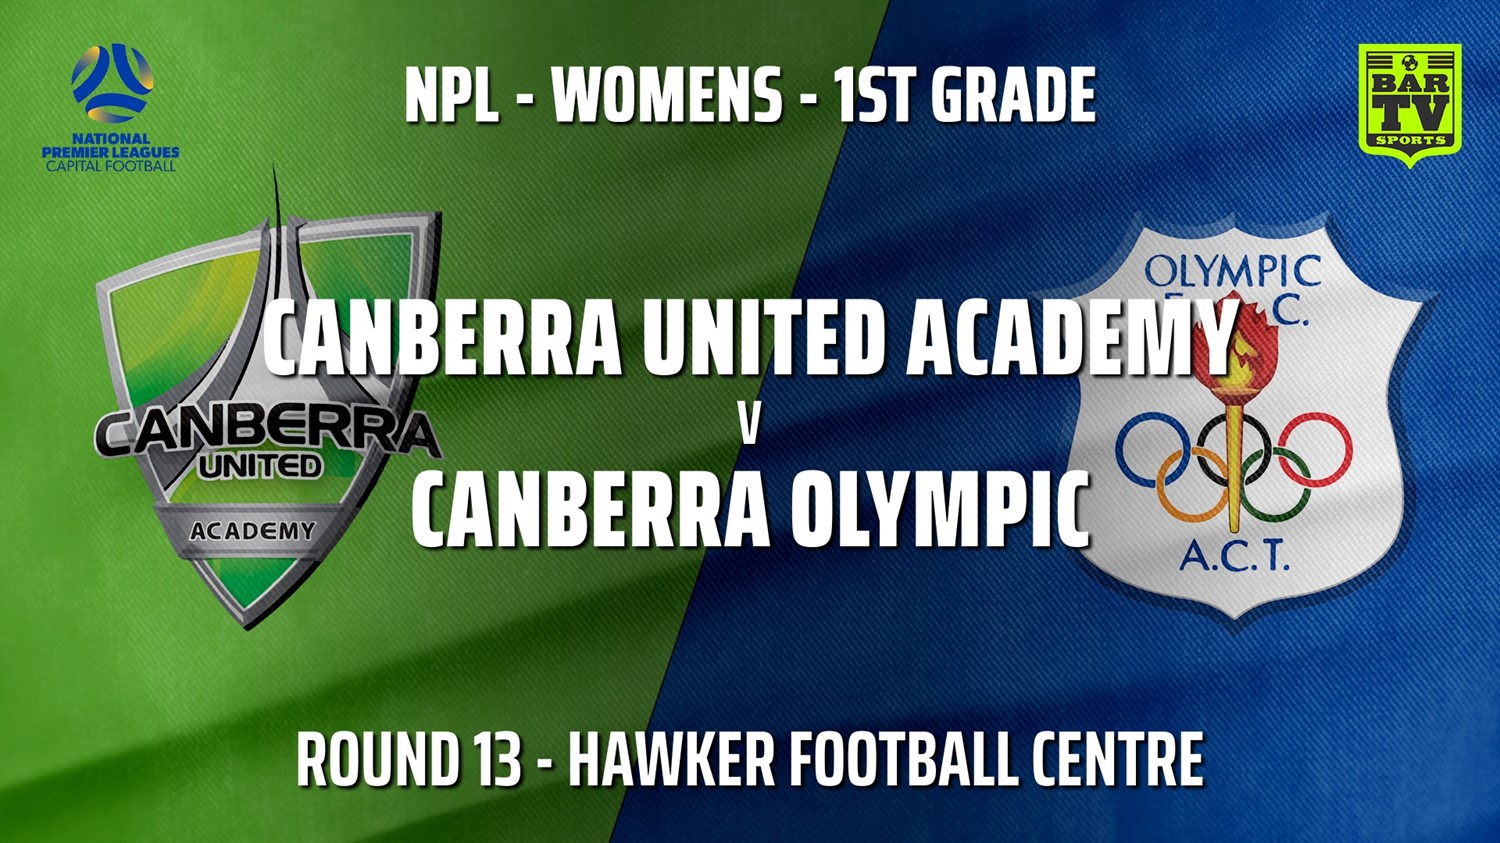 210711-Capital Womens Round 13 - Canberra United Academy v Canberra Olympic FC (women) Minigame Slate Image